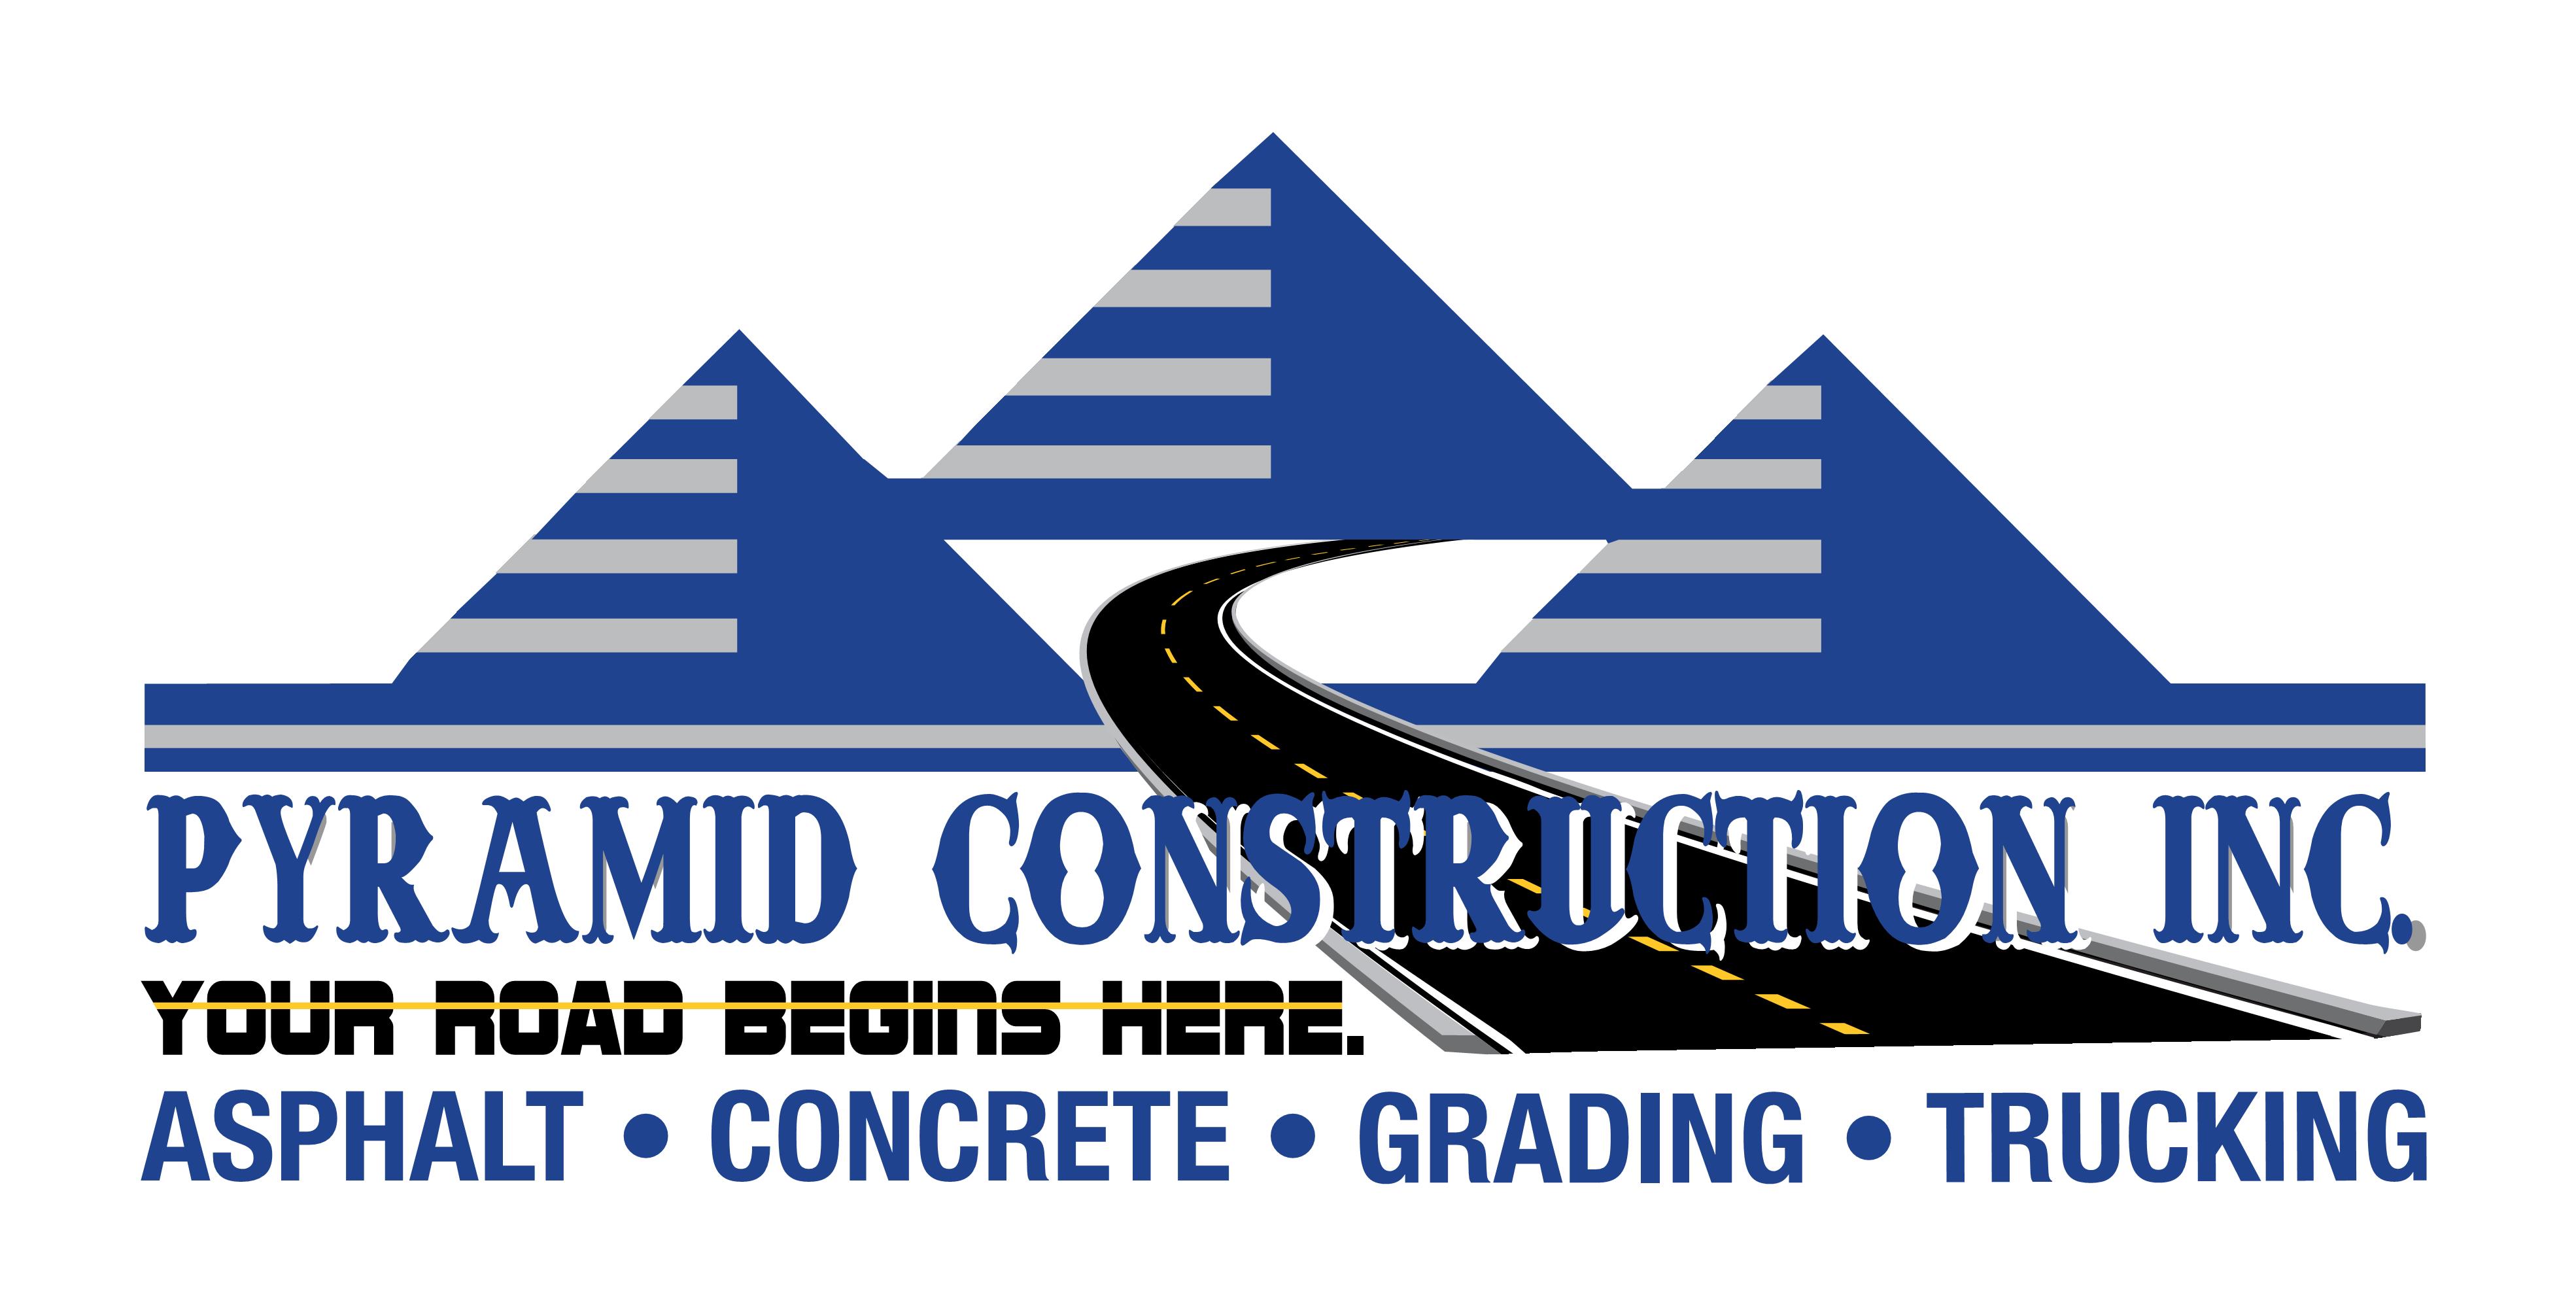 Pyramid Construction Inc